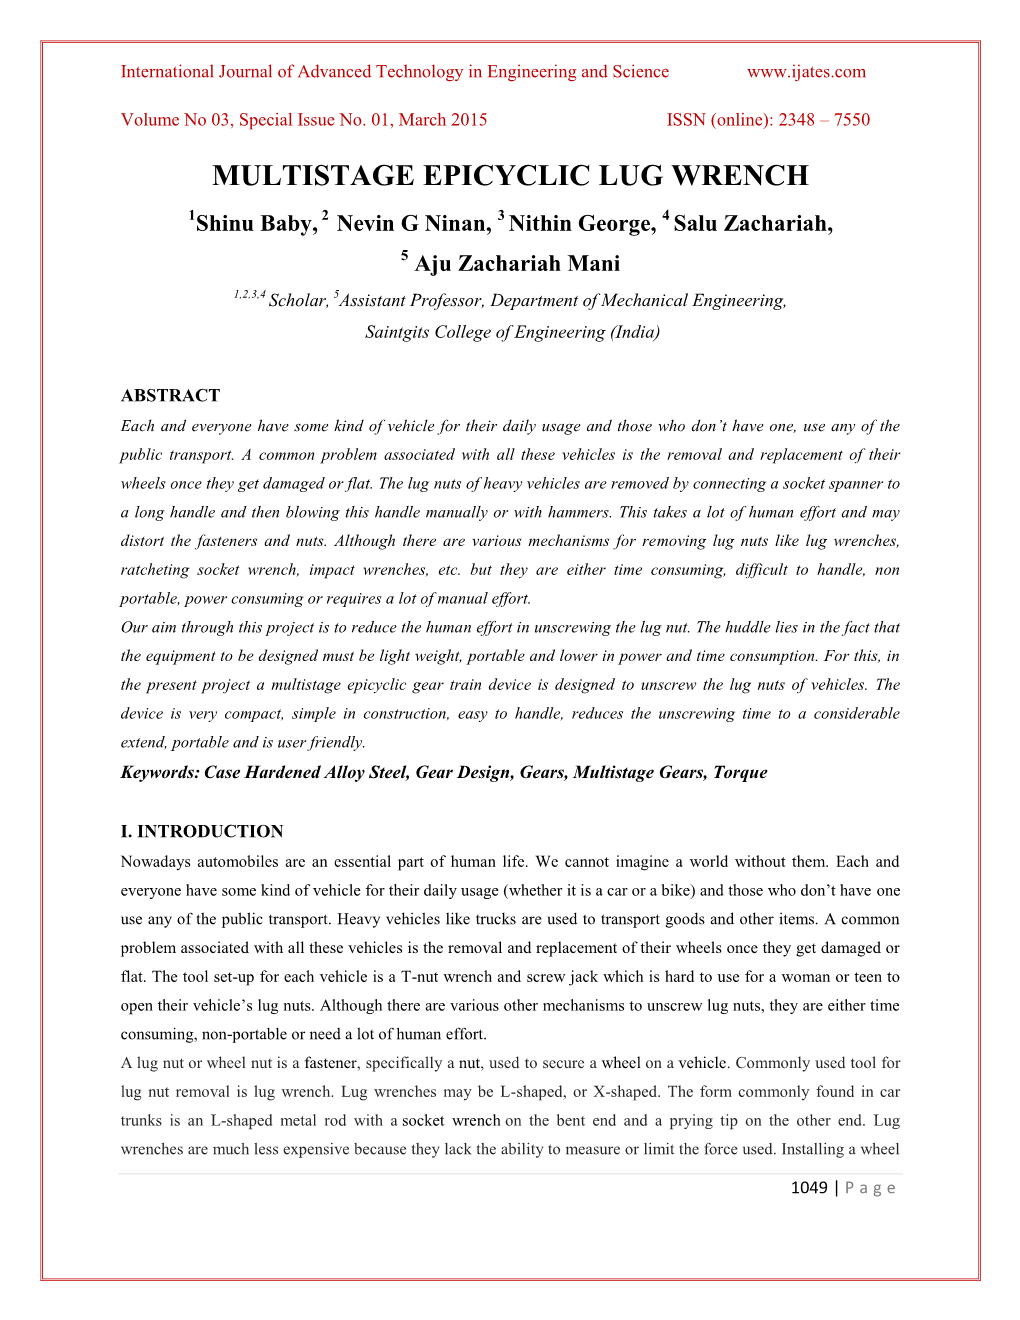 Multistage Epicyclic Lug Wrench